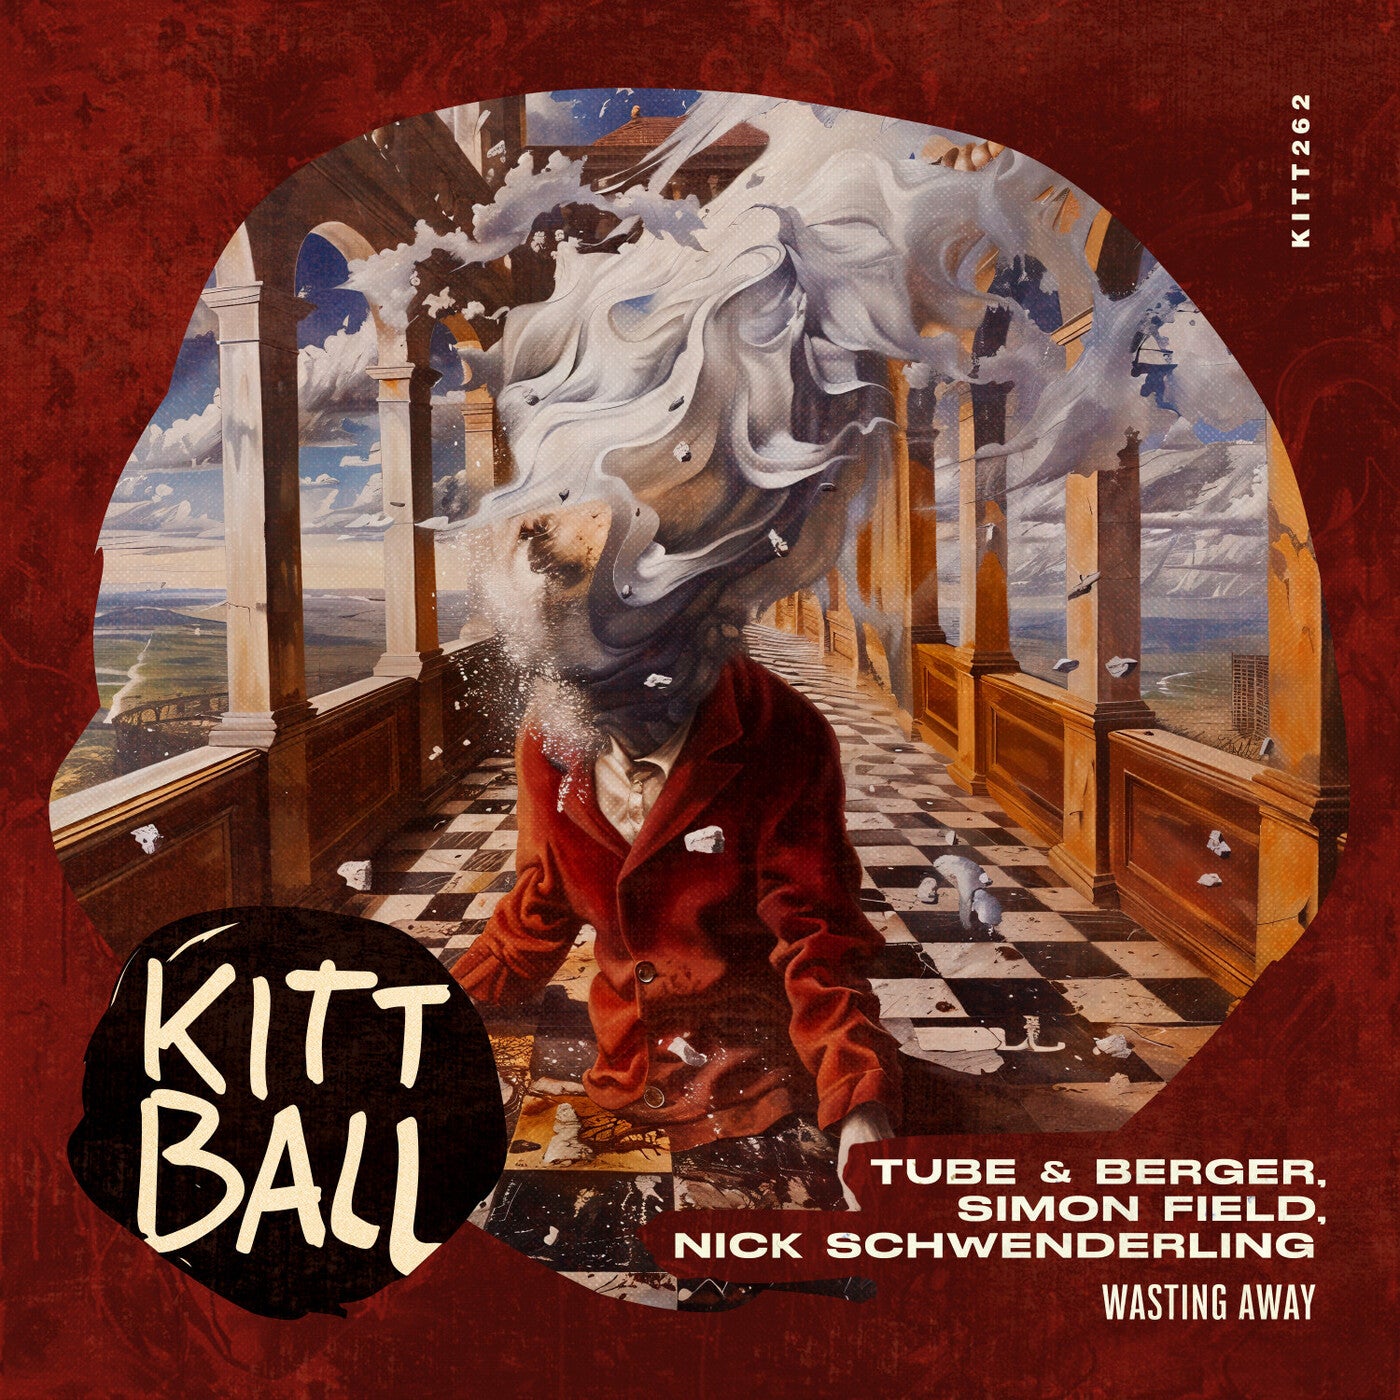 image cover: Tube & Berger, Simon Field, Nick Schwenderling - Wasting Away on Kittball